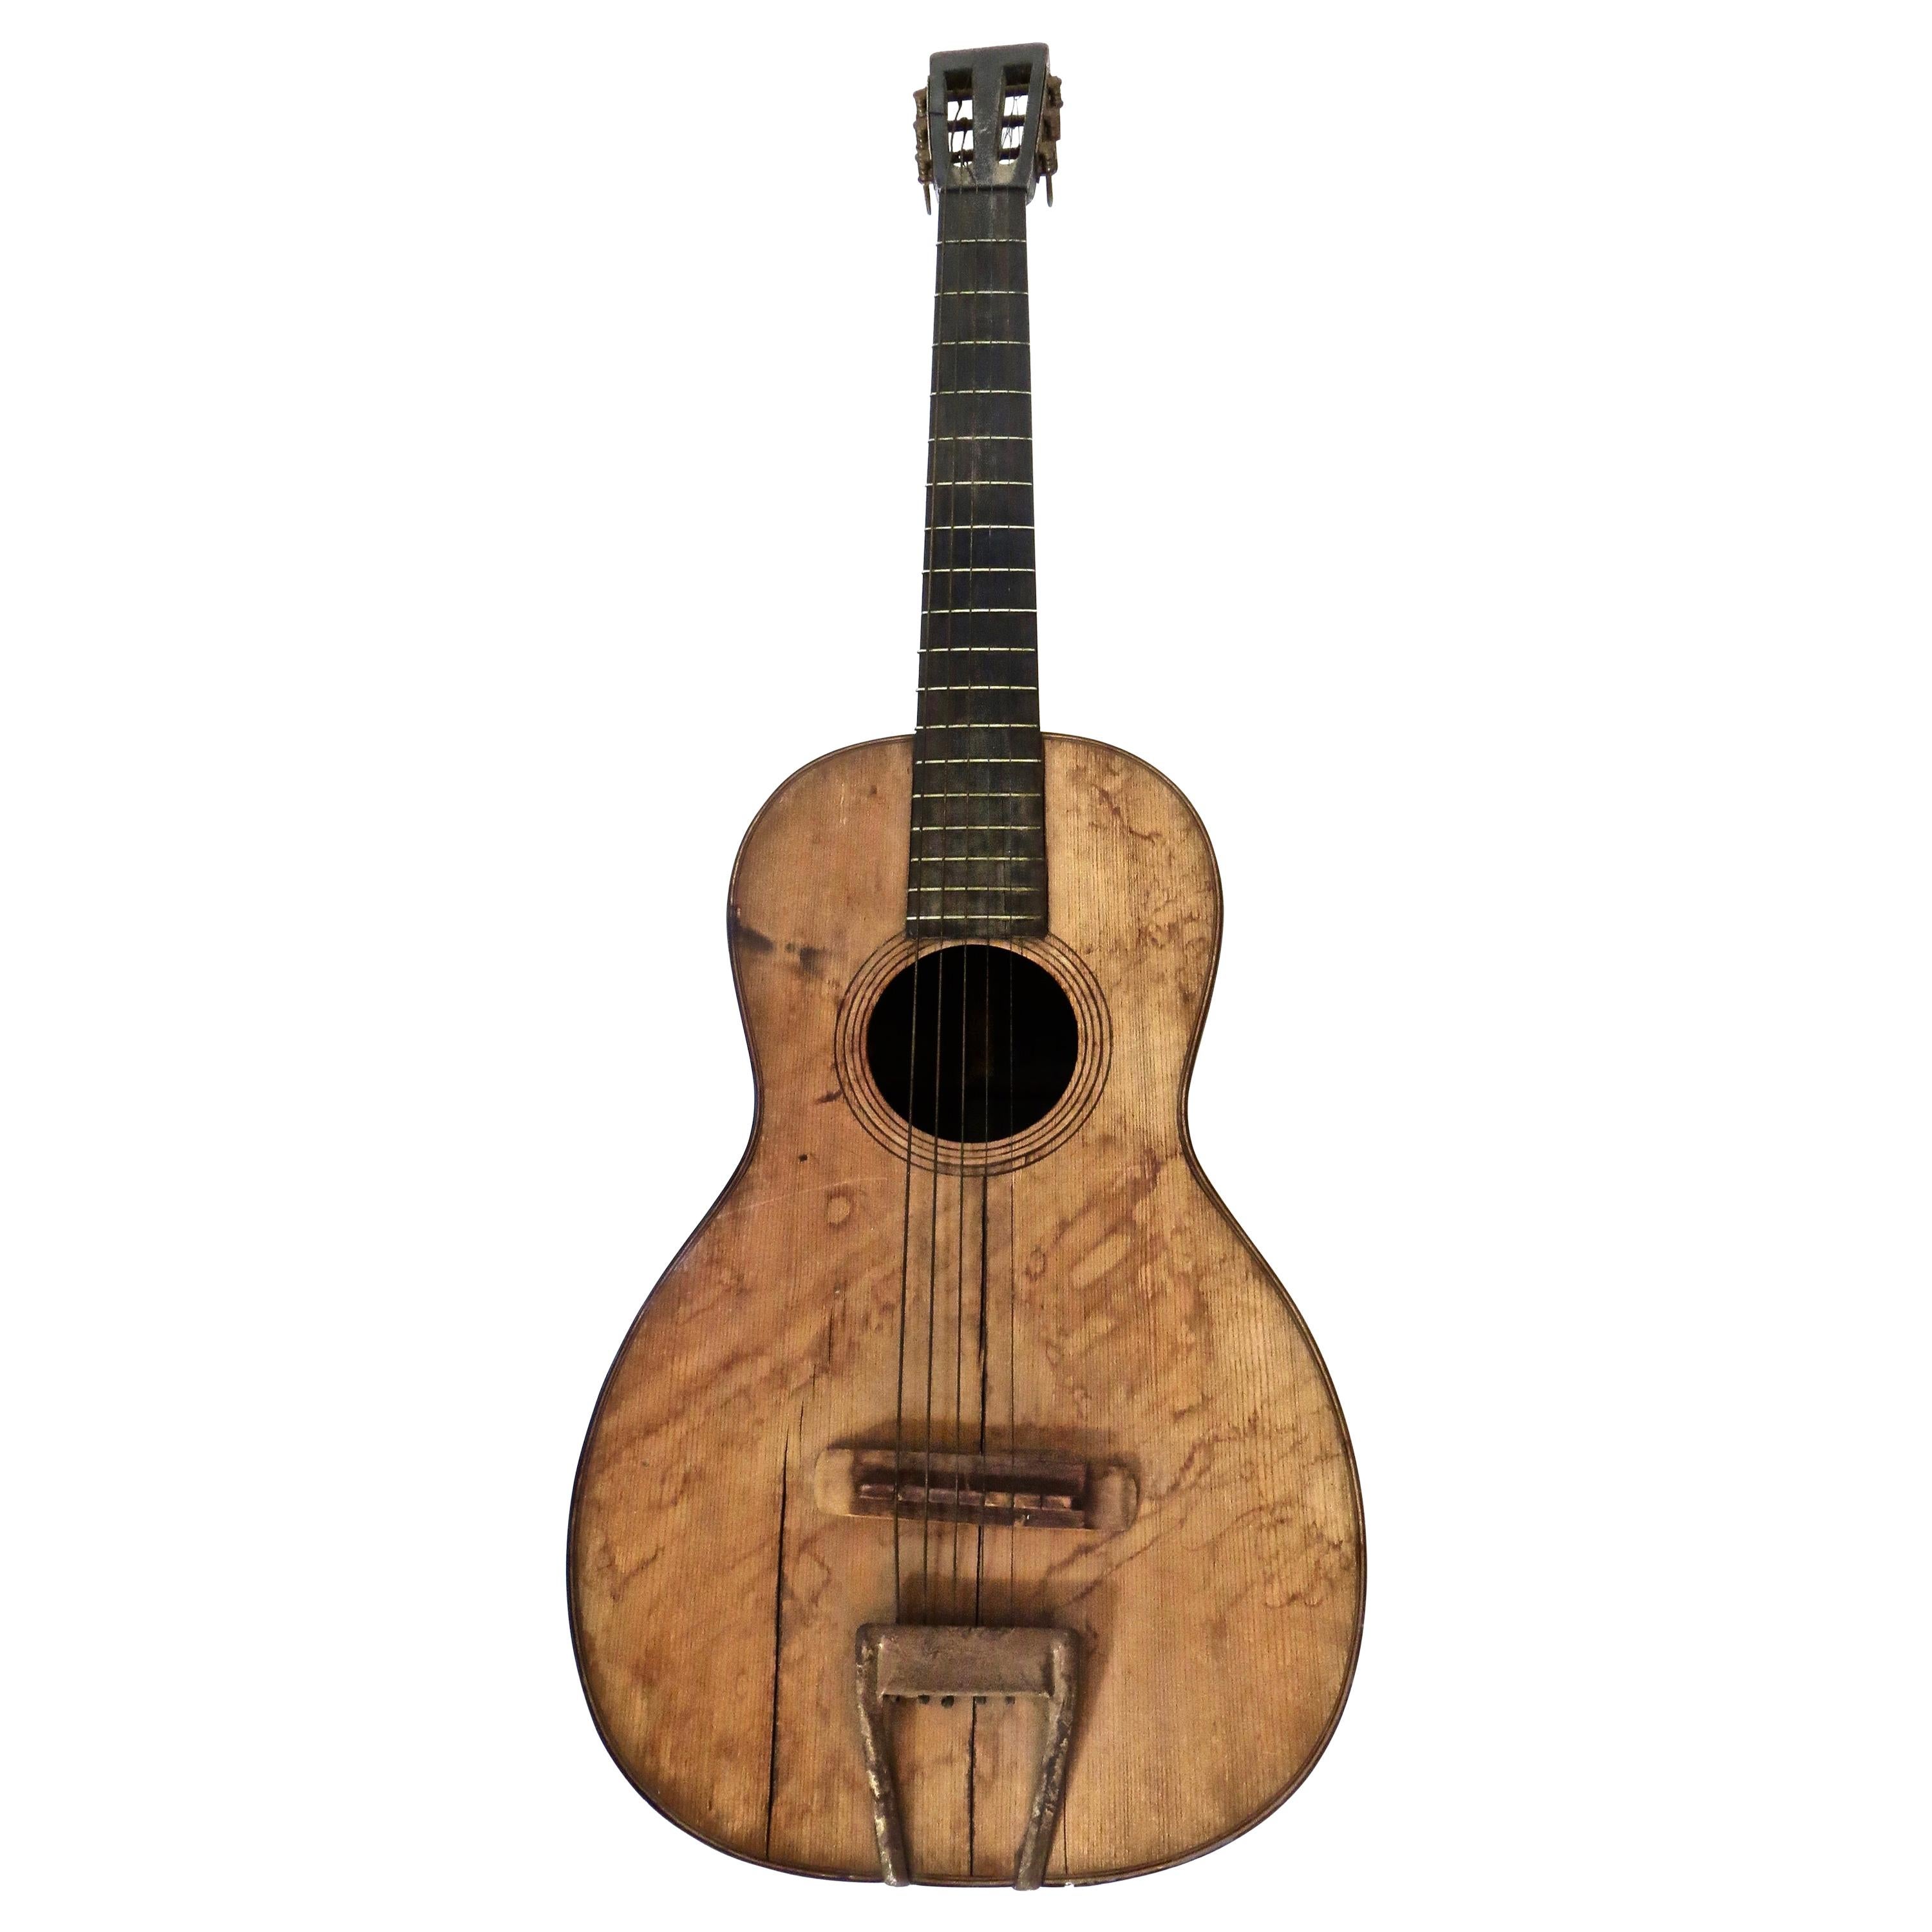 19th Century Martin Parlor Guitar 2 1/2-17 American 'Un-Restored’